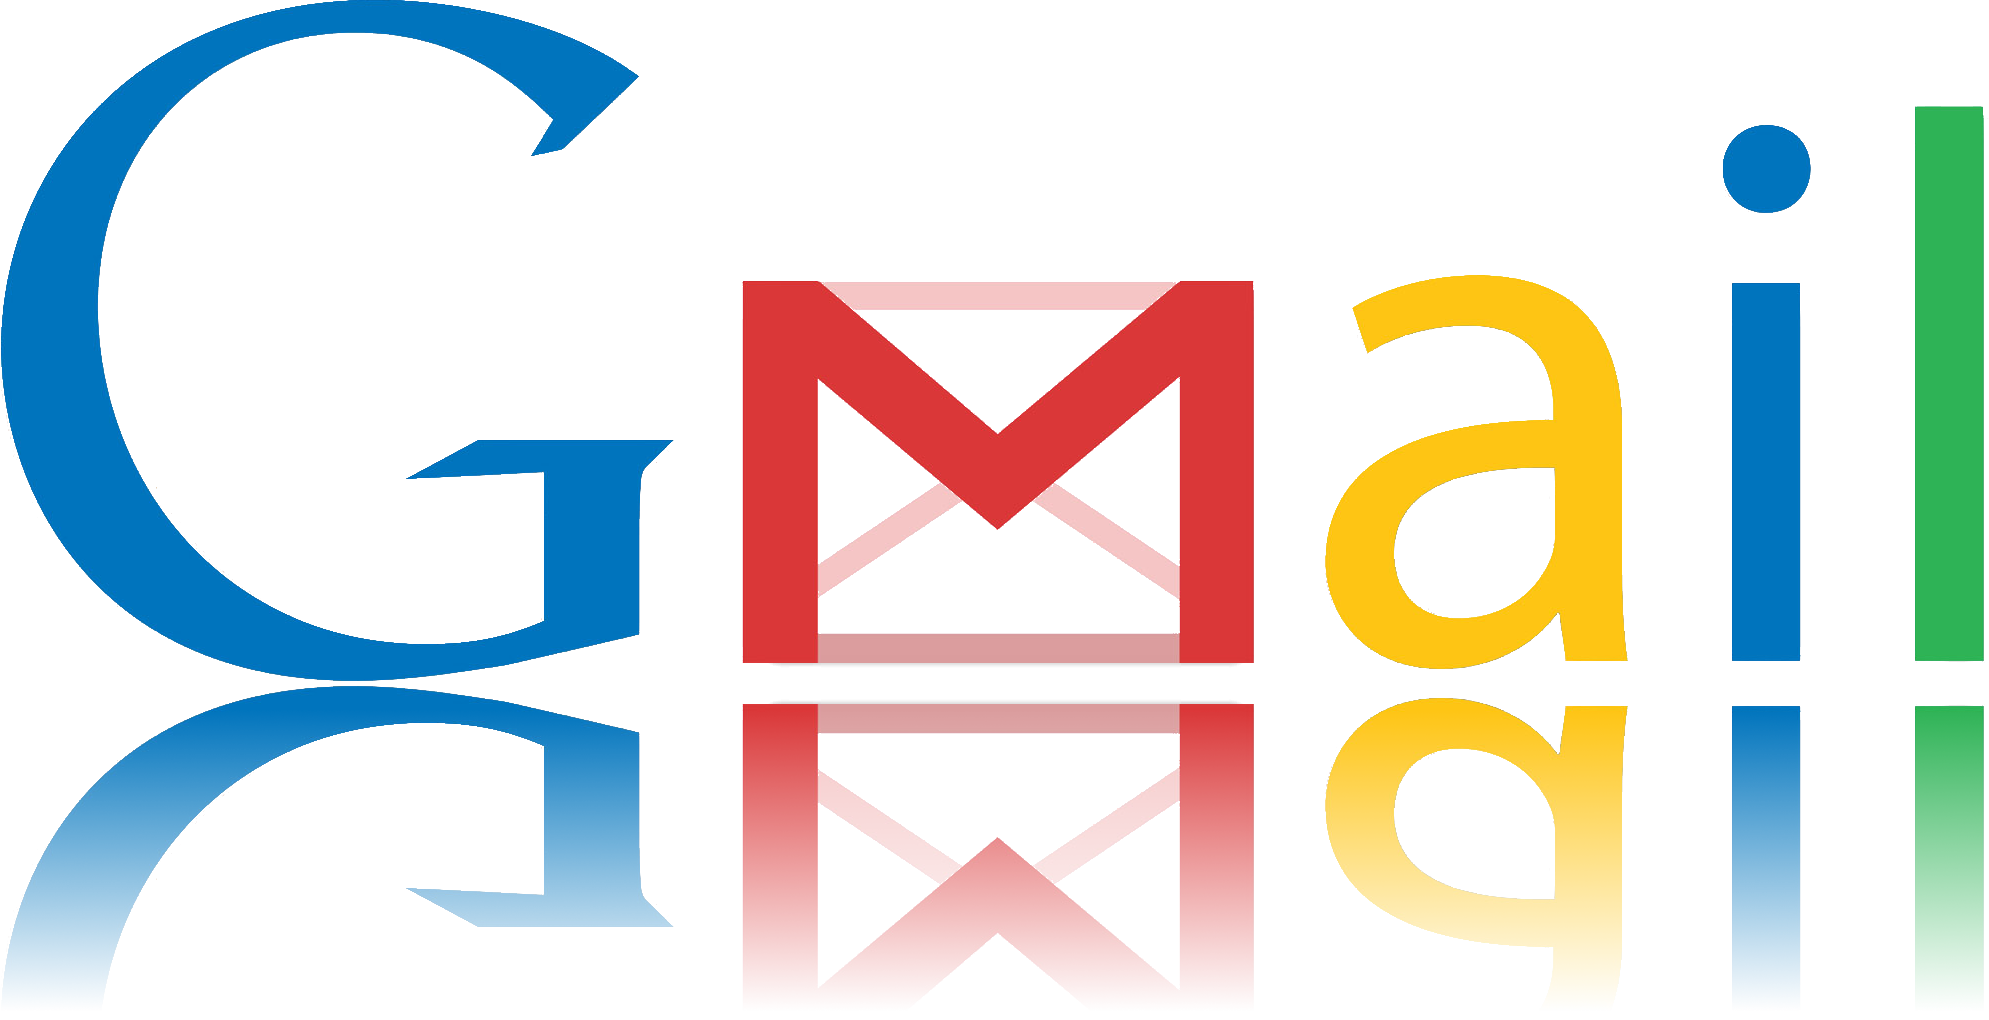 11 gmail com. Gmail лого. Почта gmail PNG. Gmail логотип PNG.